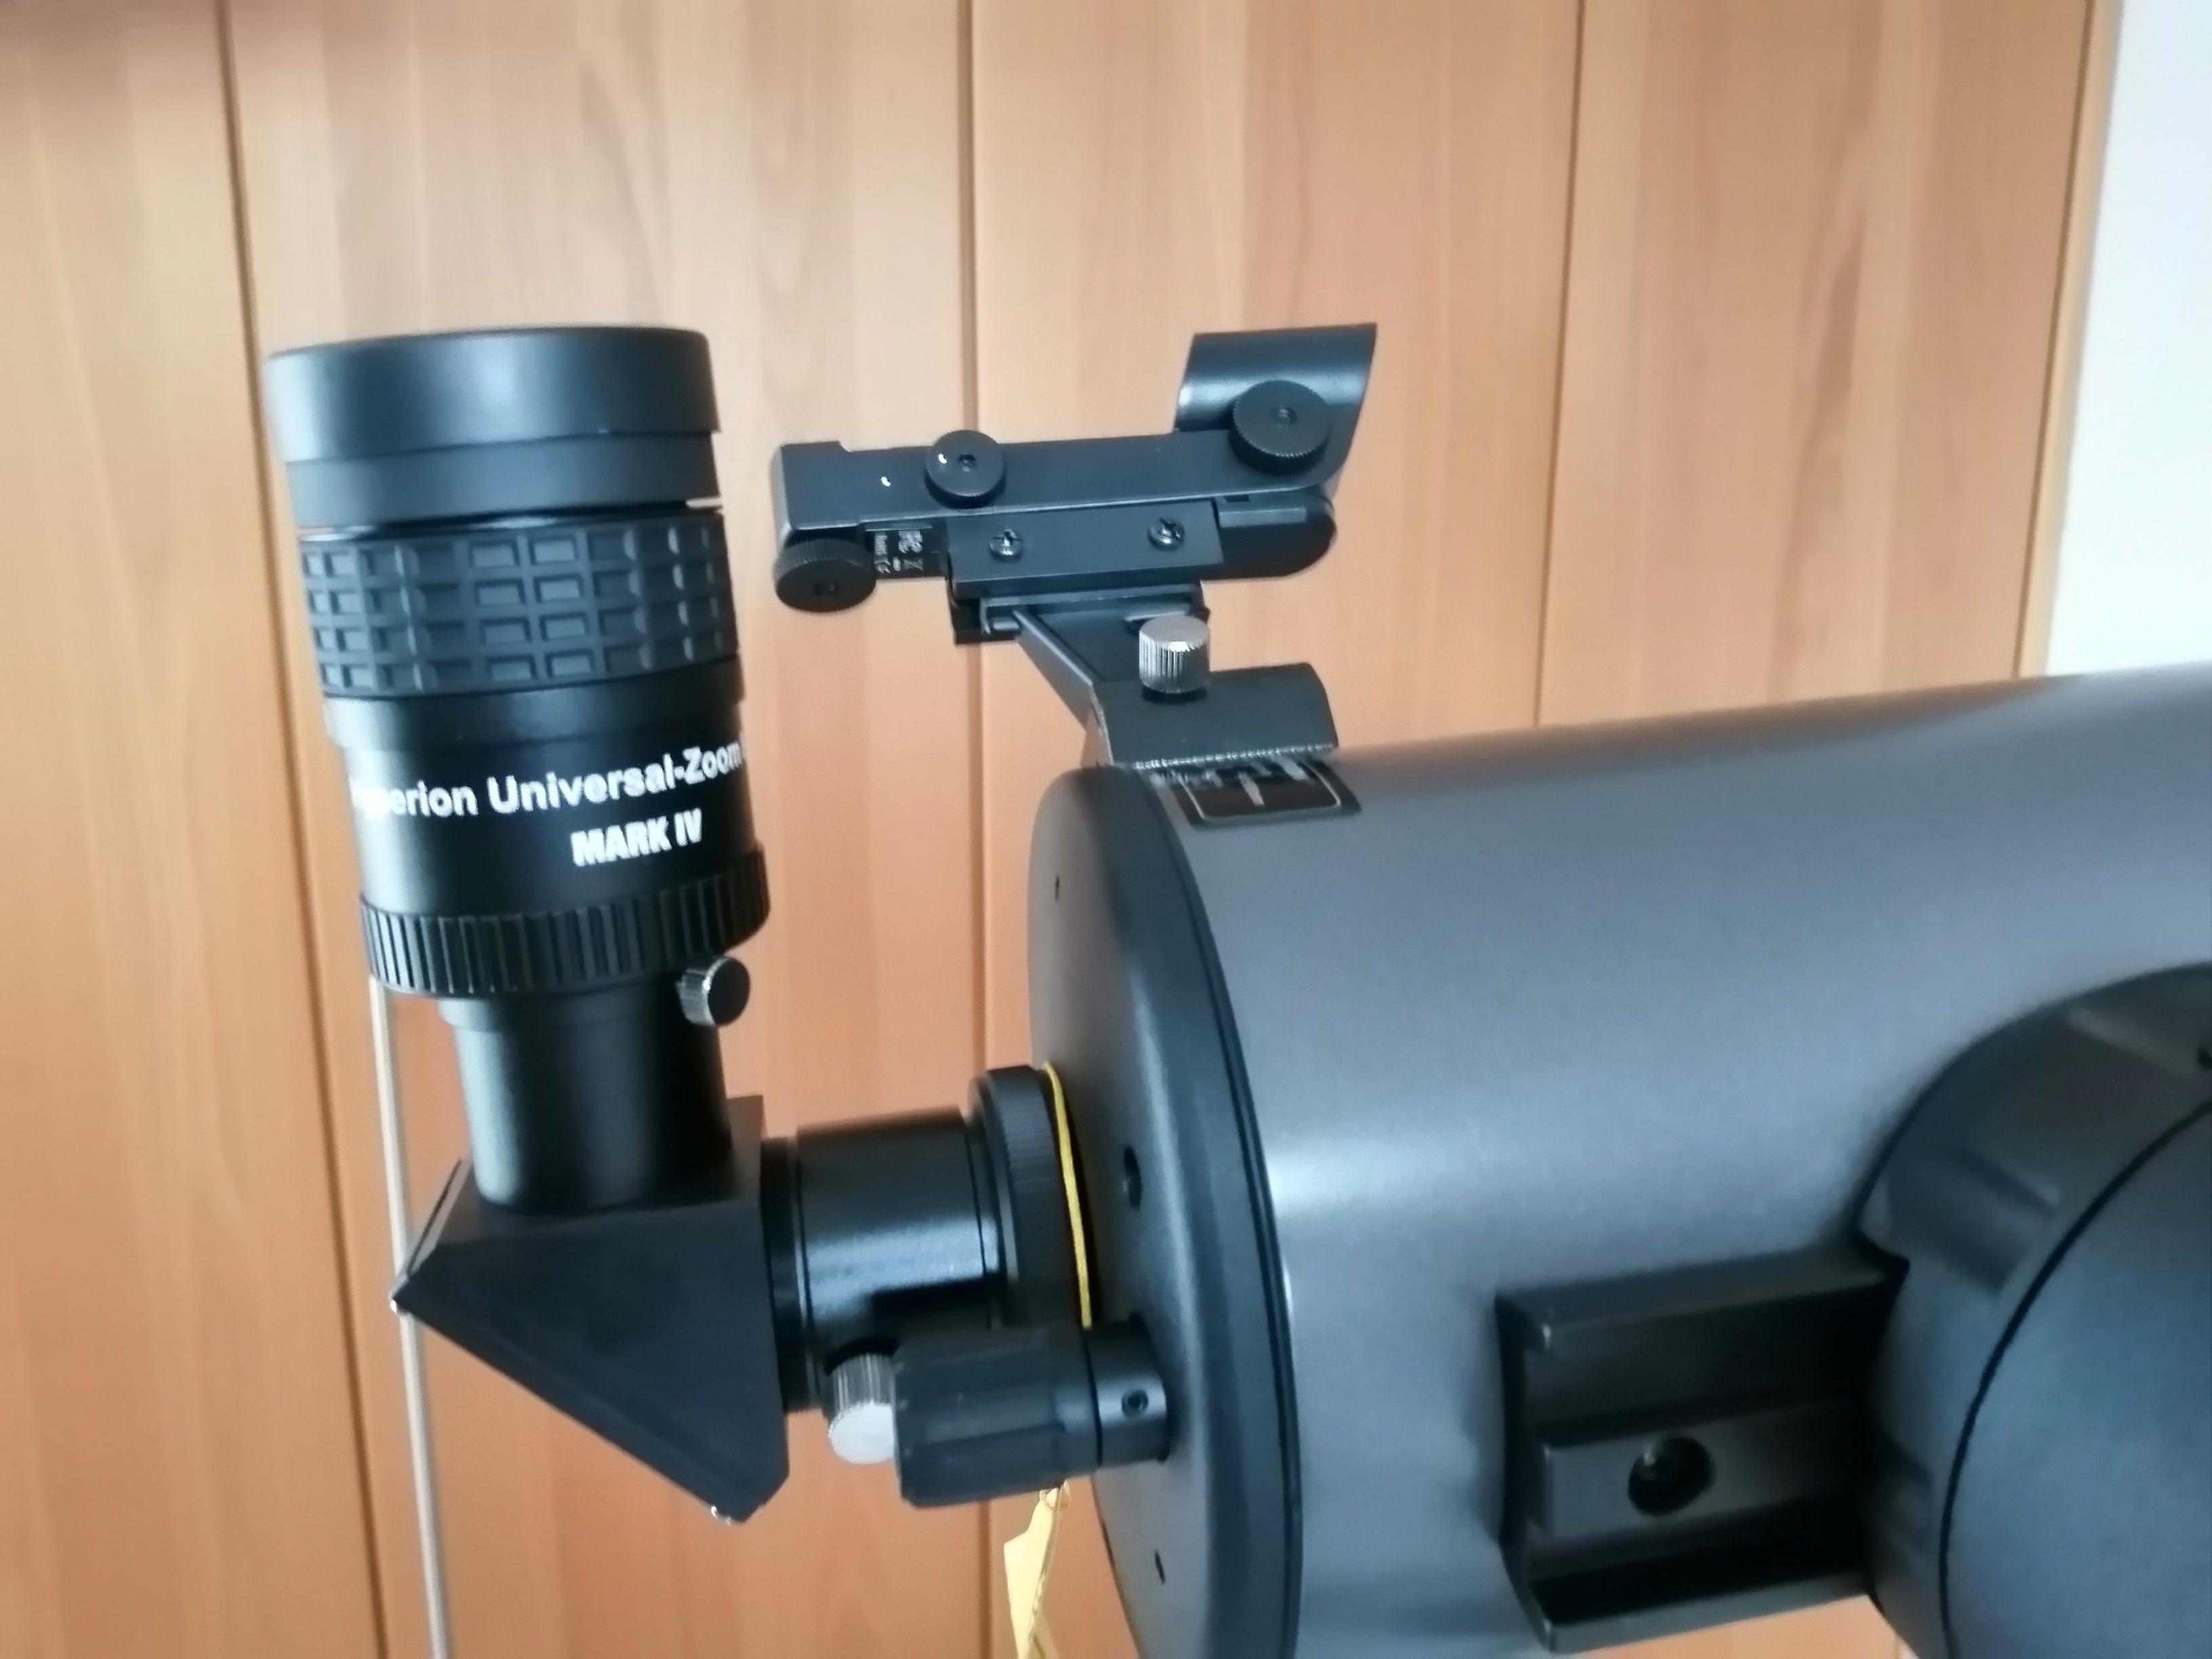 Baader Planetarium Eyepiece Baader Hyperion Universal Zoom Mark IV, 8-24mm eyepiece (1¼" and 2") - 2454826